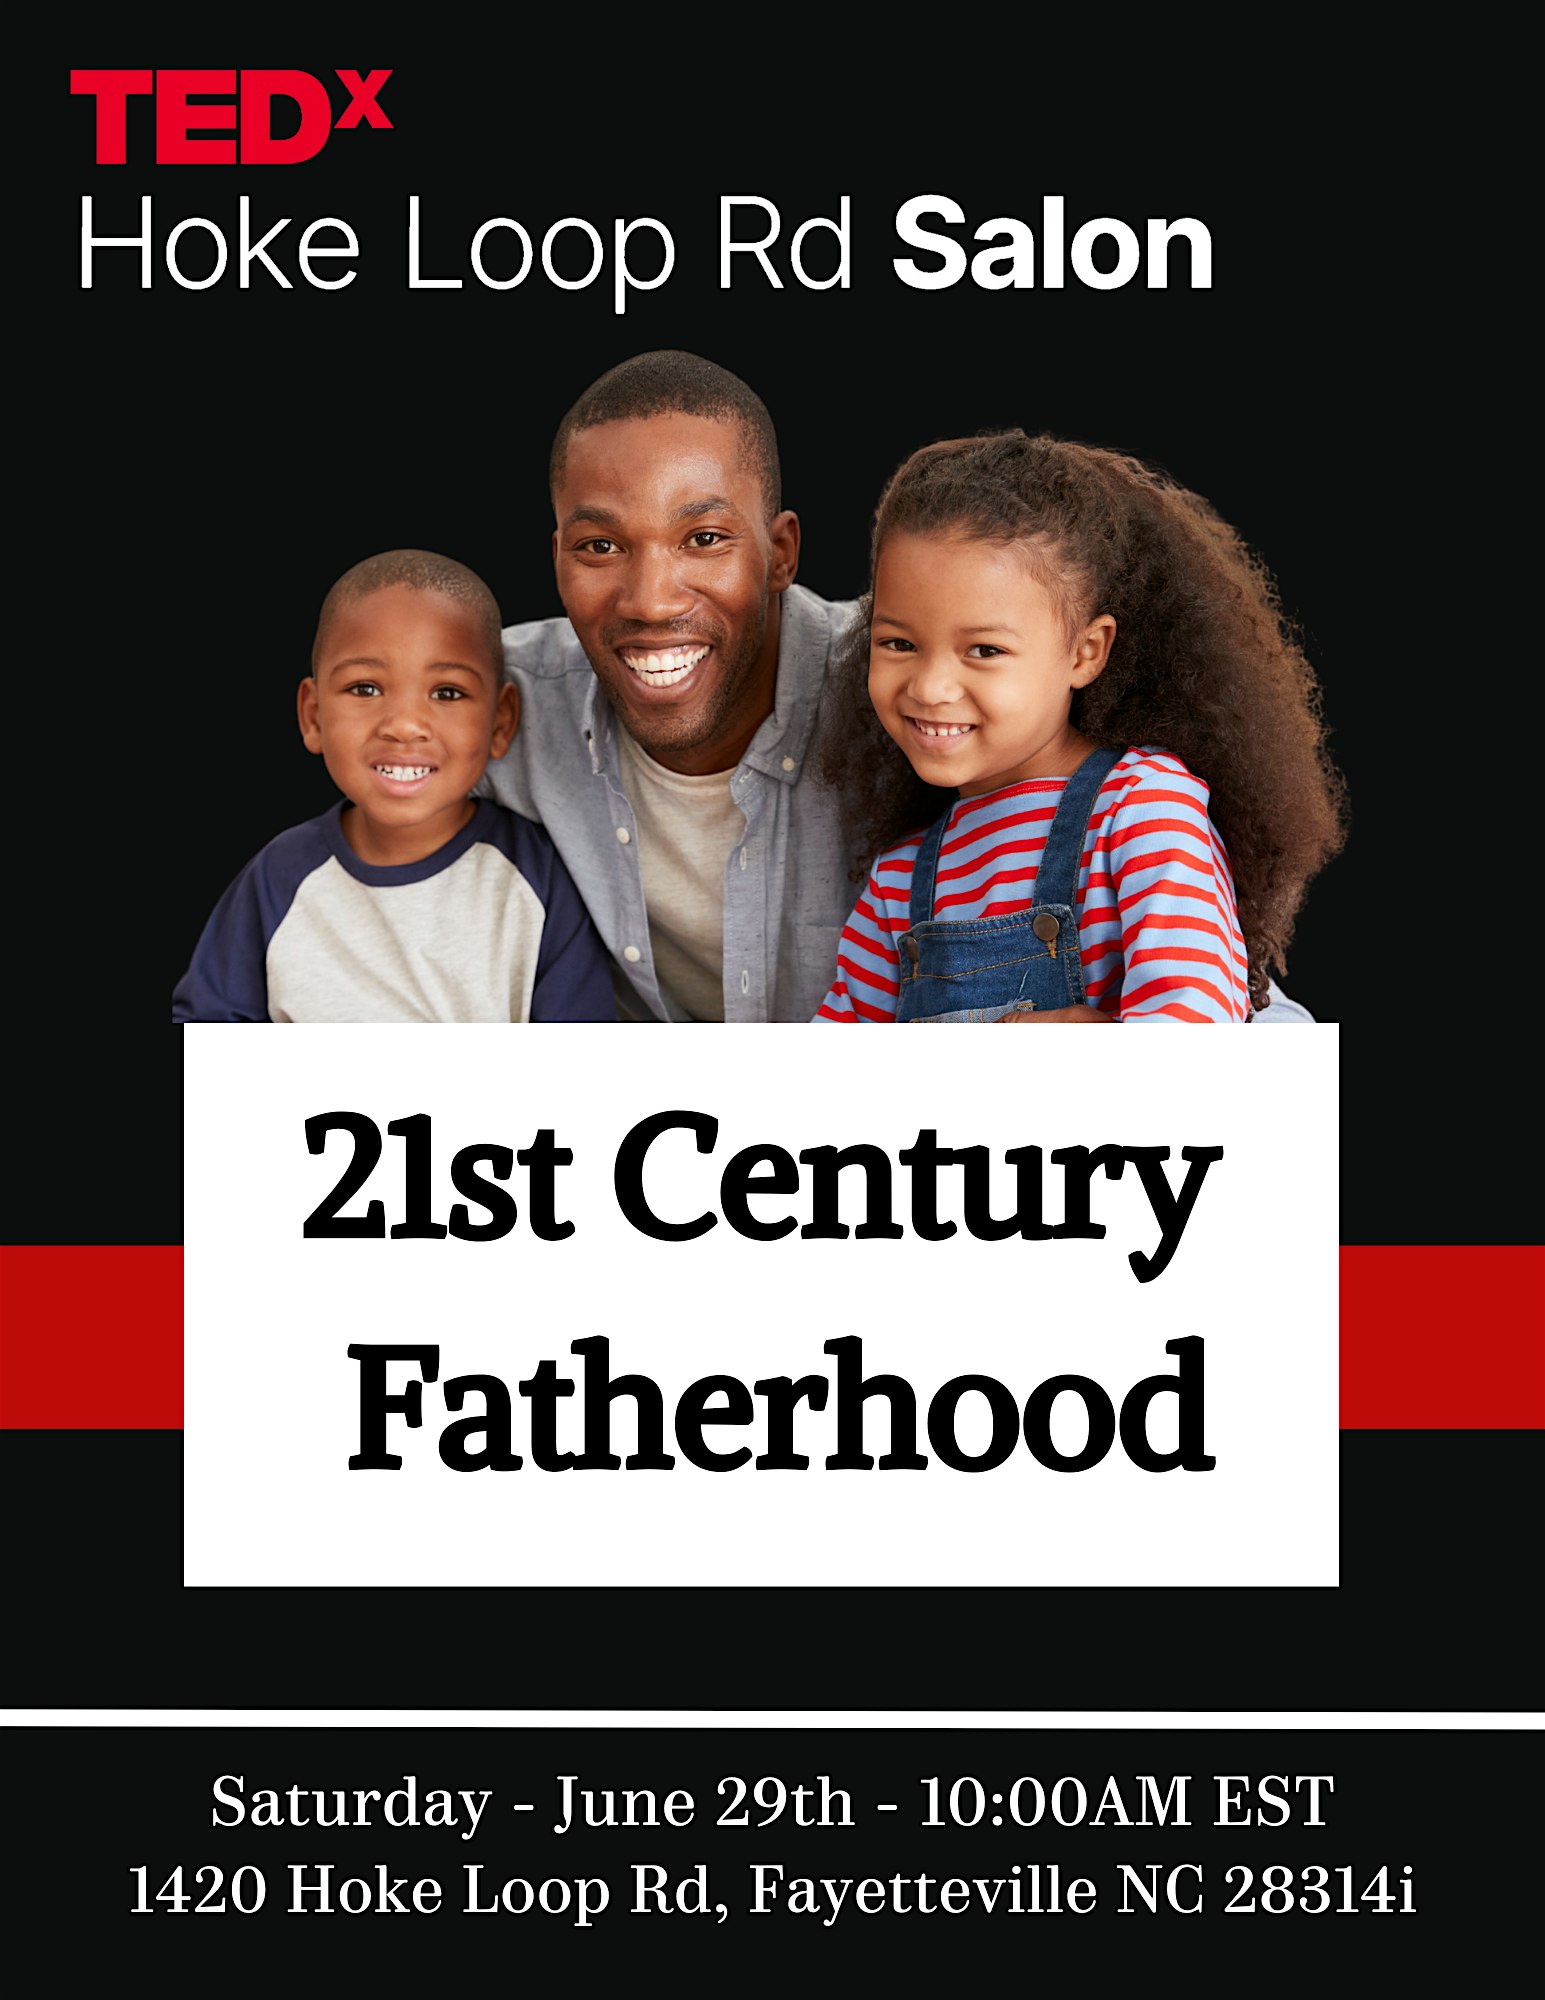 TEDx Salon Hoke Loop Rd - 21st Century Fatherhood